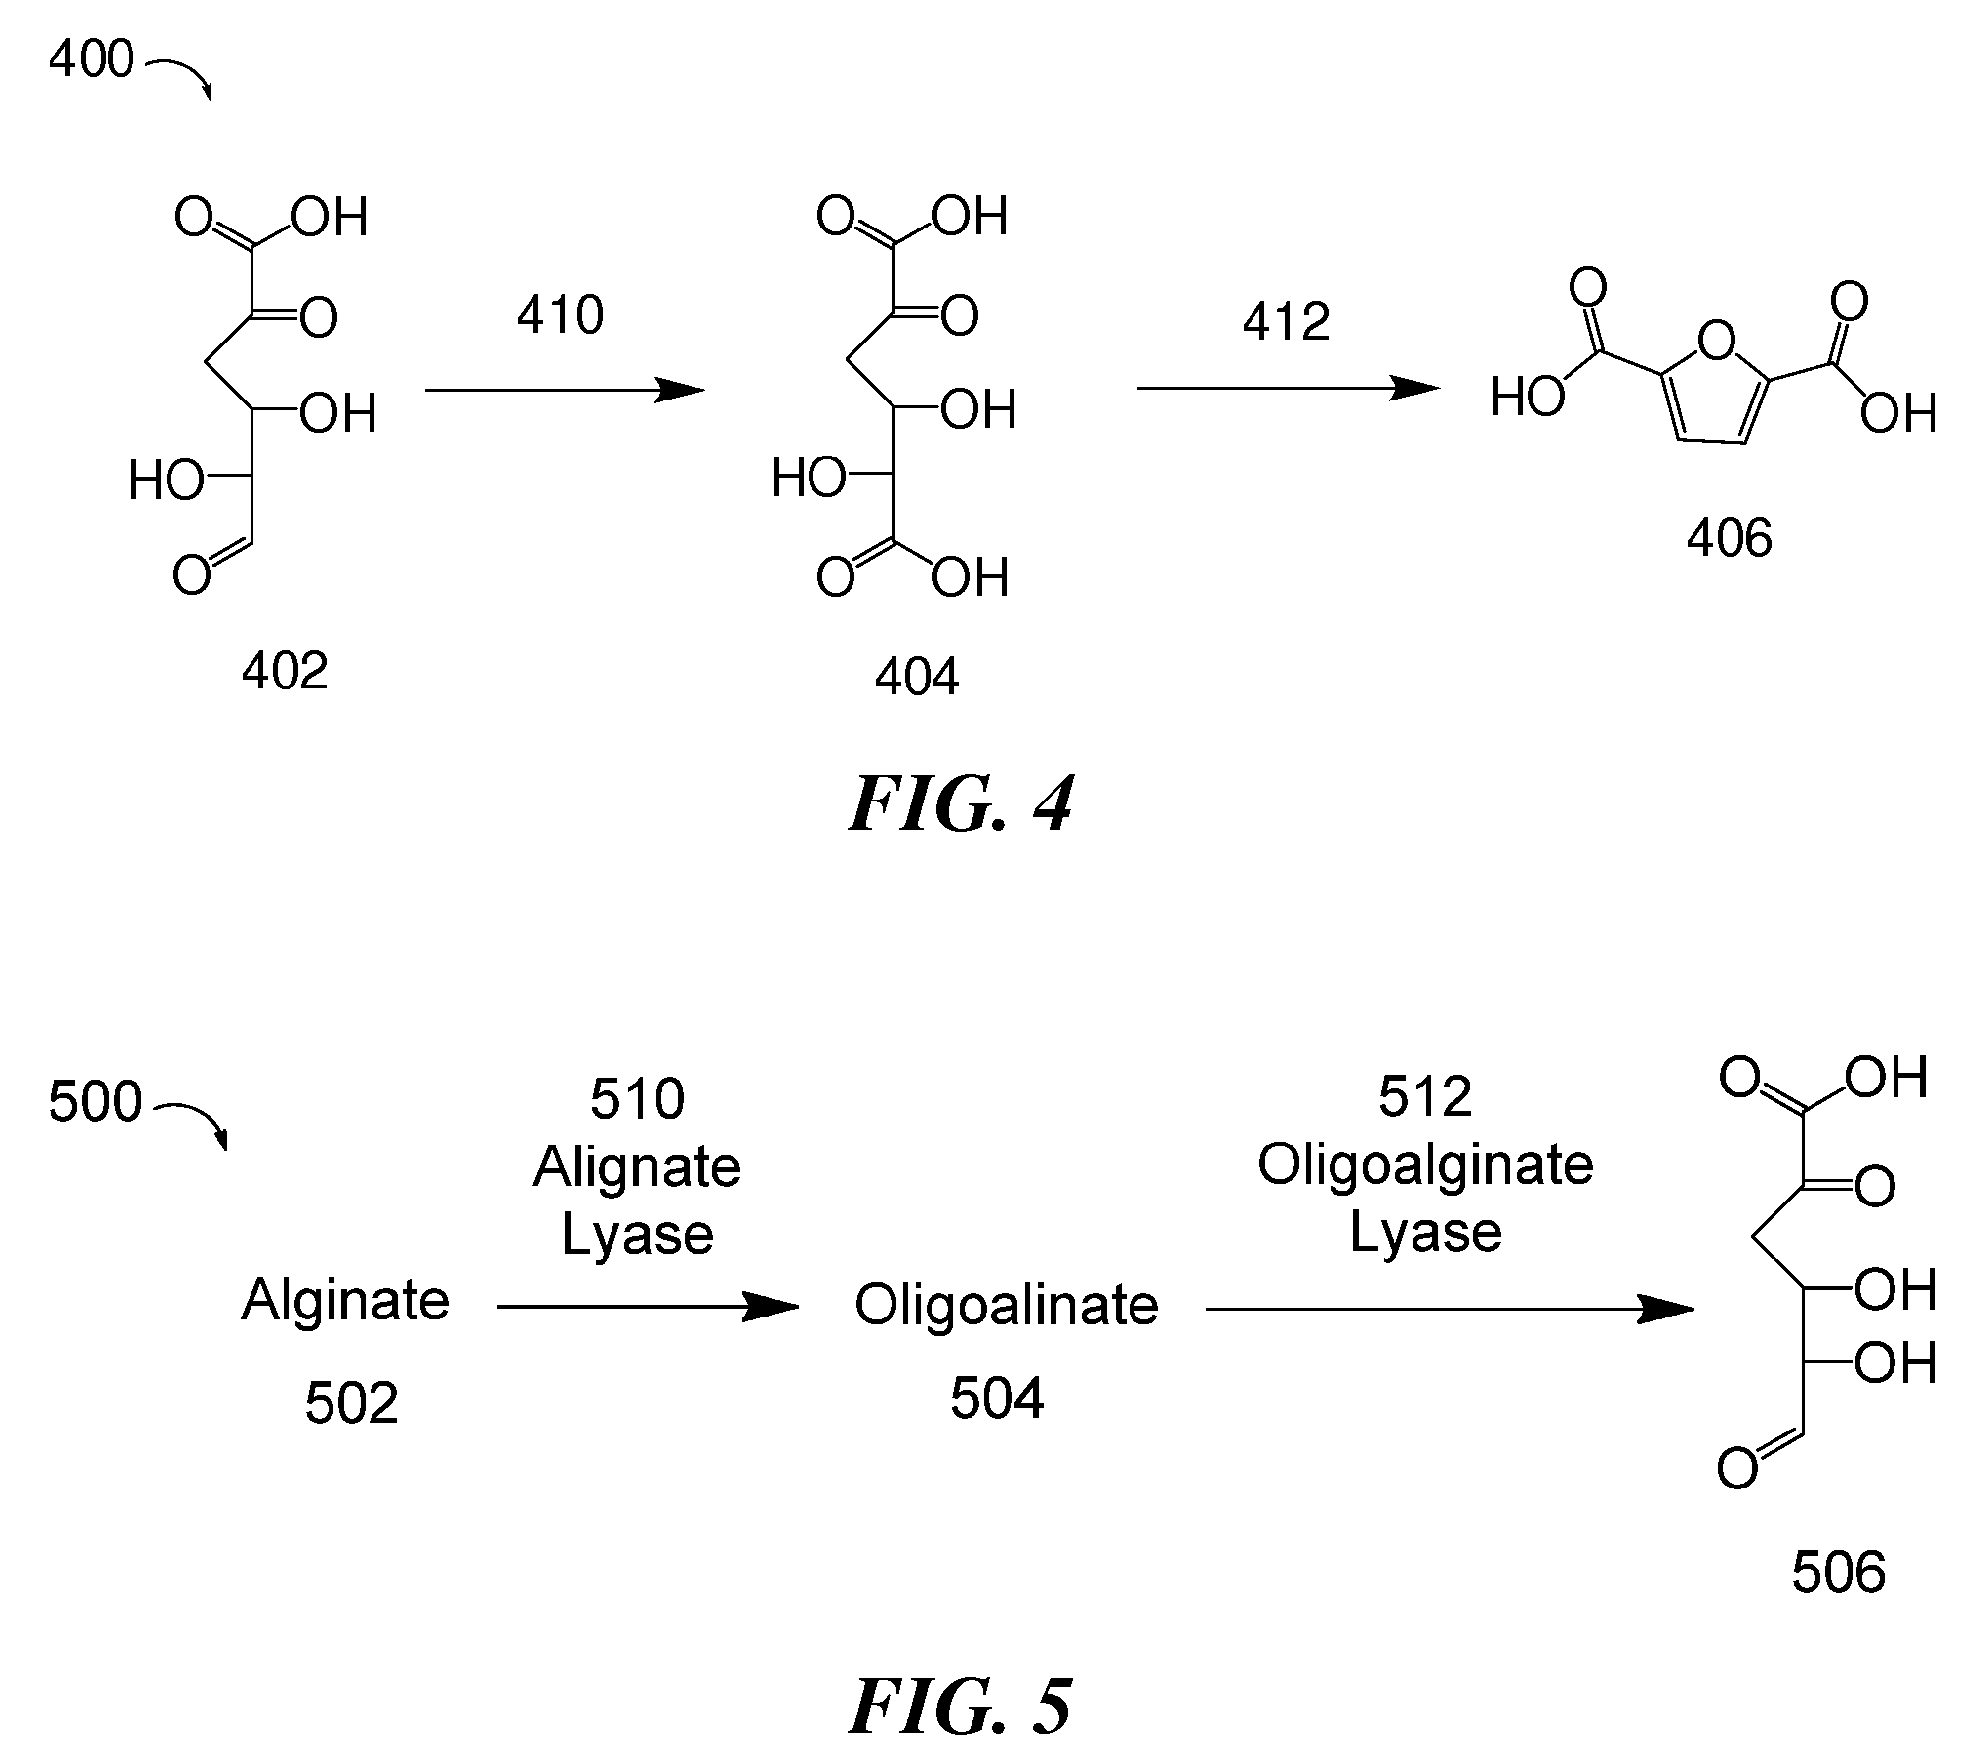 Methods for preparing 2,5-furandicarboxylic acid